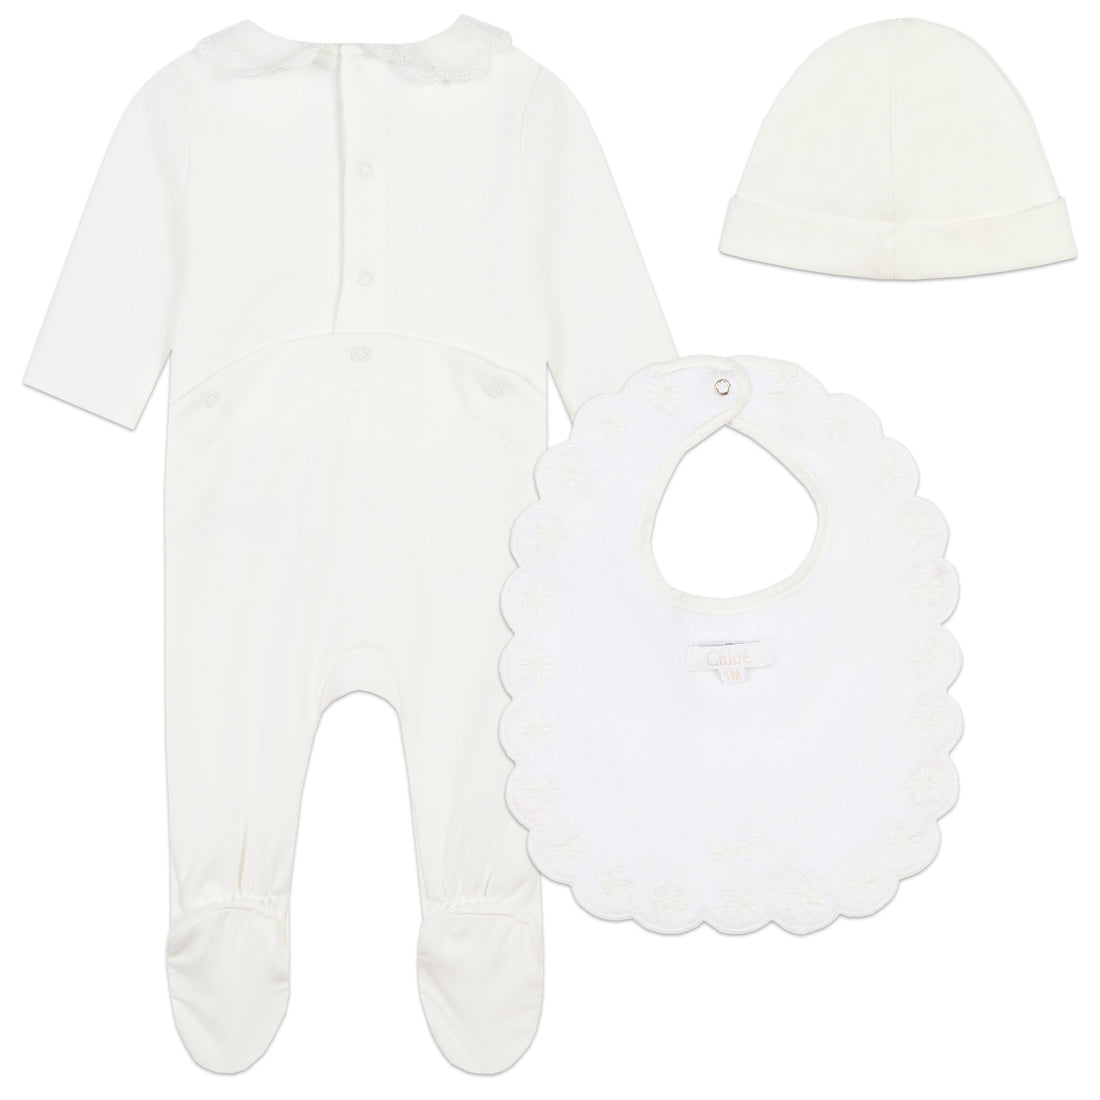 Chloe Pyjamas Offwhite - Comfortable and Elegant Sleepwear for Kids | Schools Out